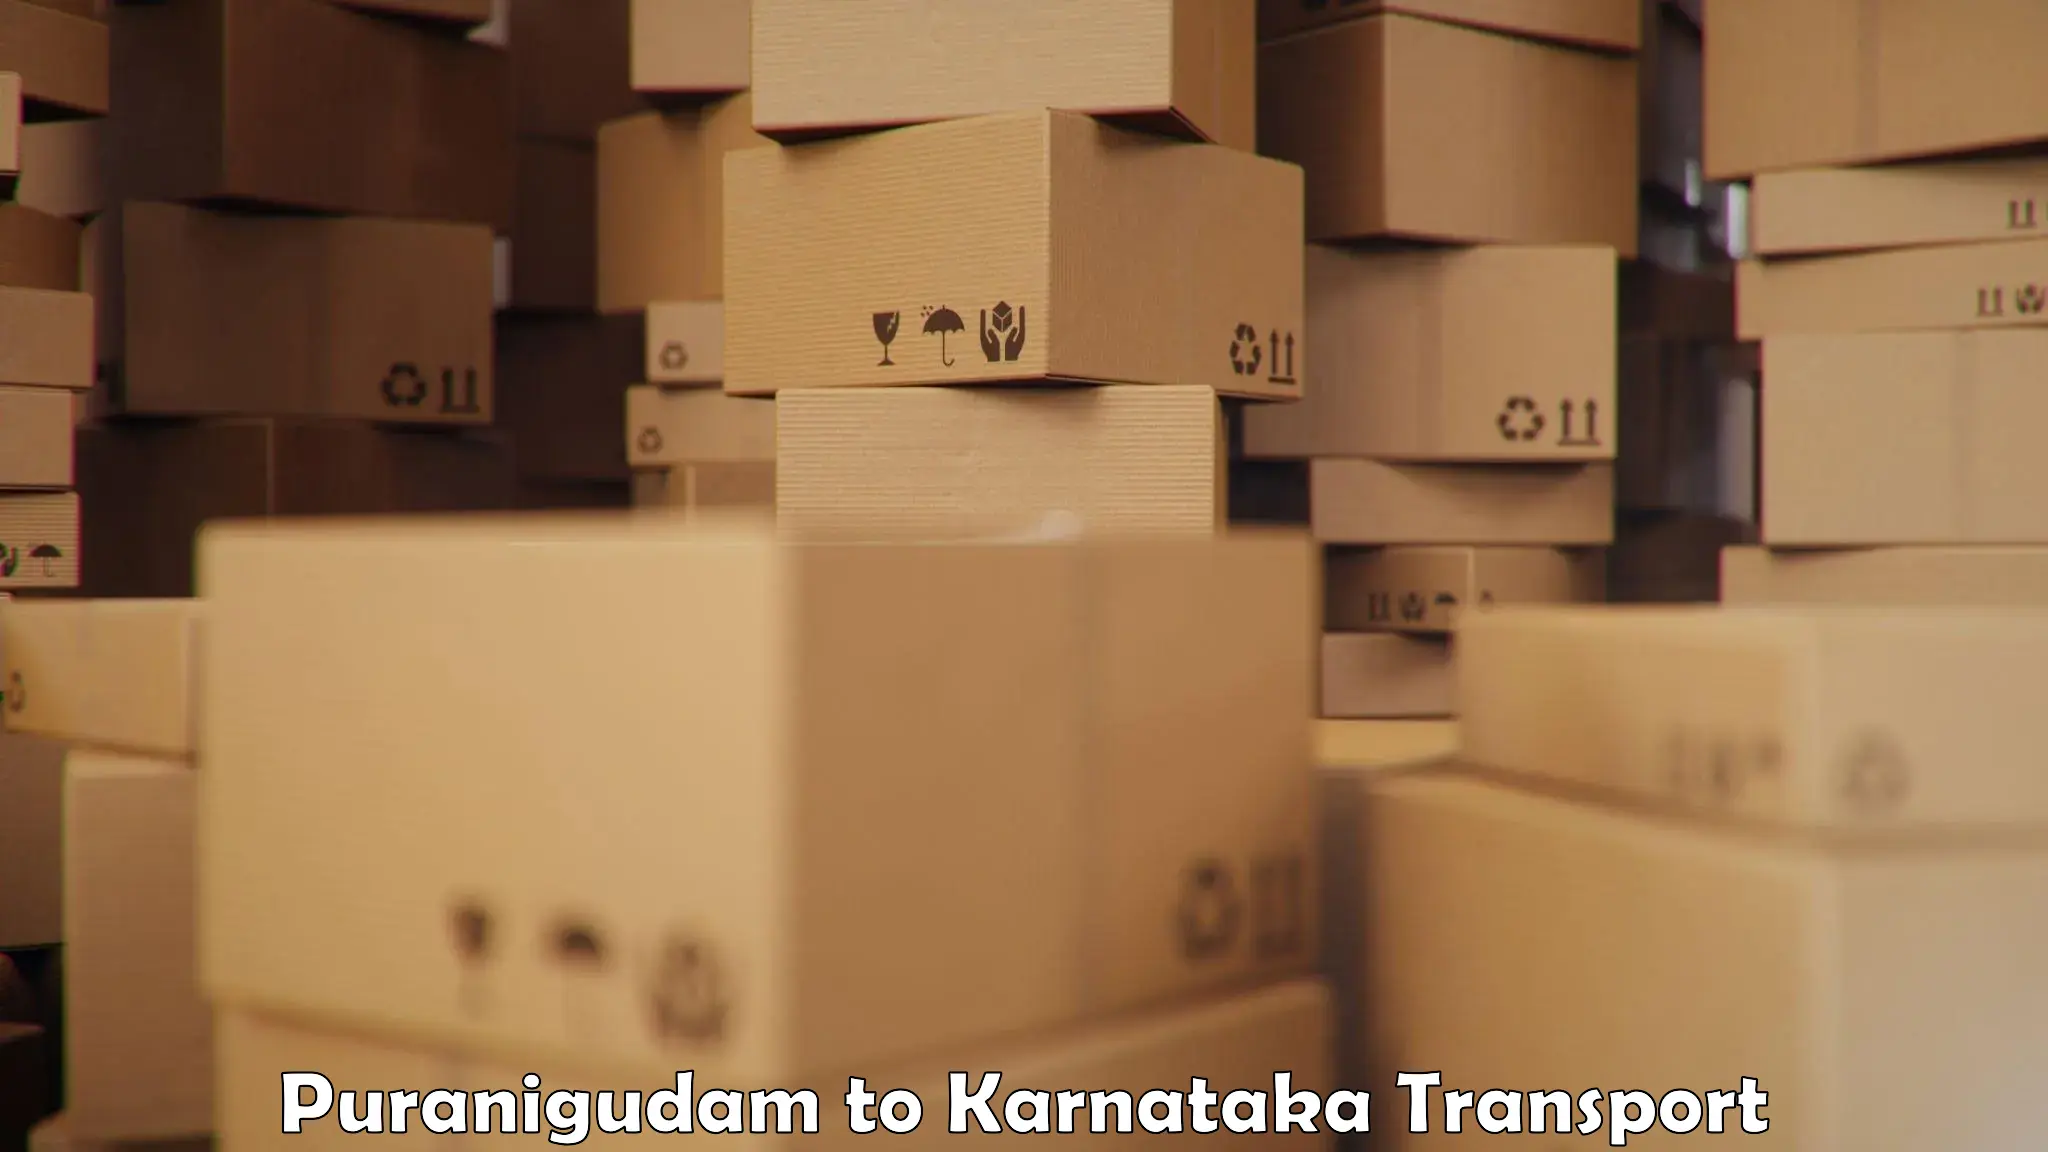 Shipping partner Puranigudam to Manipal